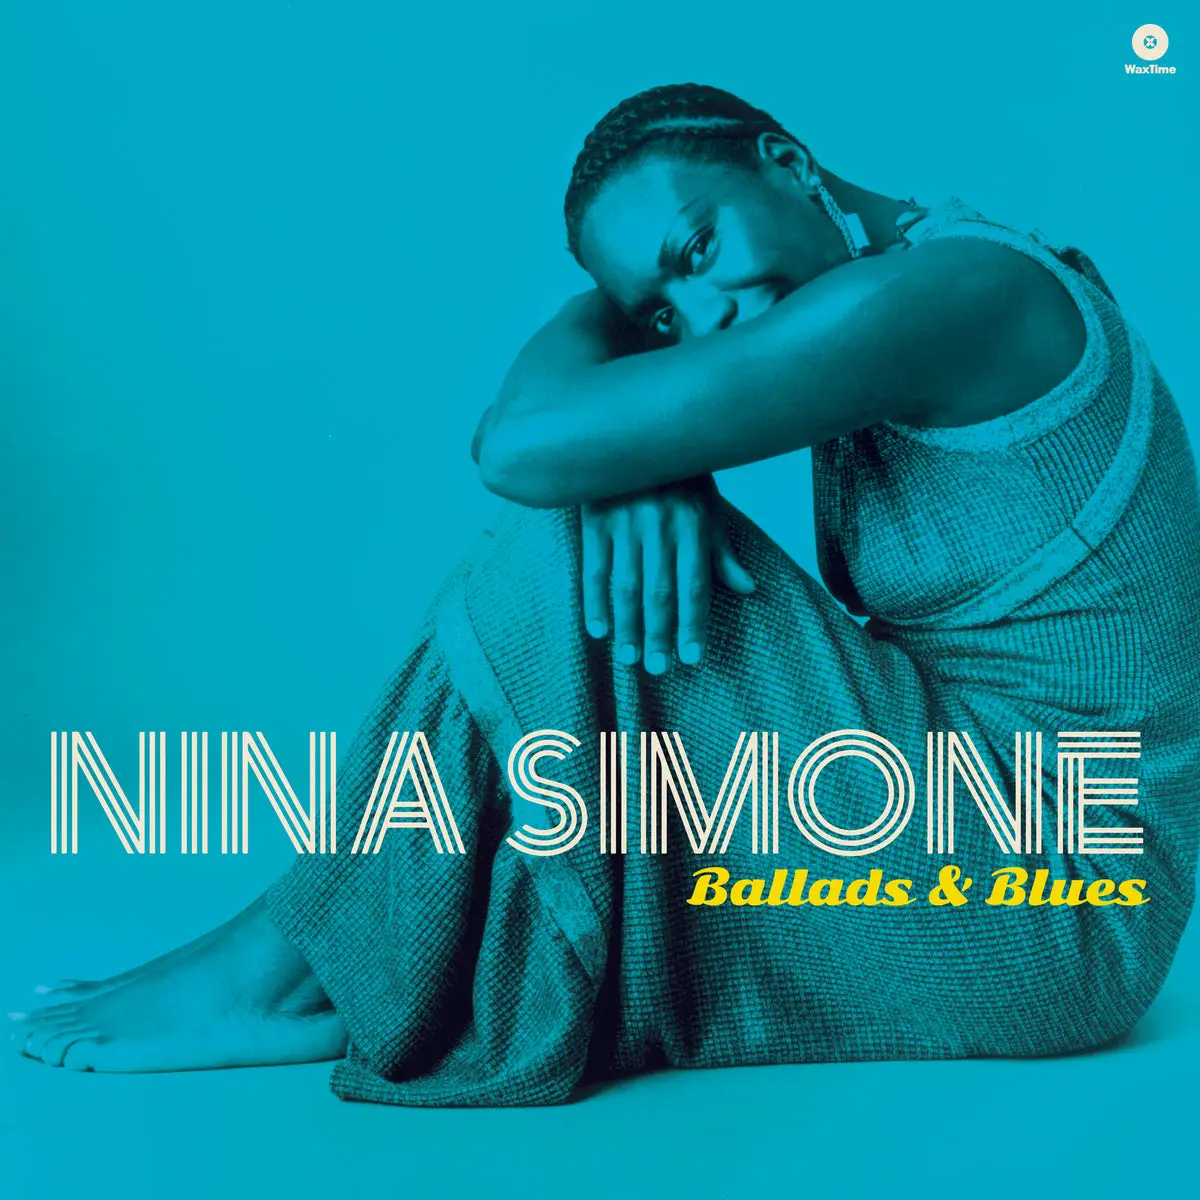 Nina Simone | Black Vinyl LP | Ballads And Blues | Waxtime